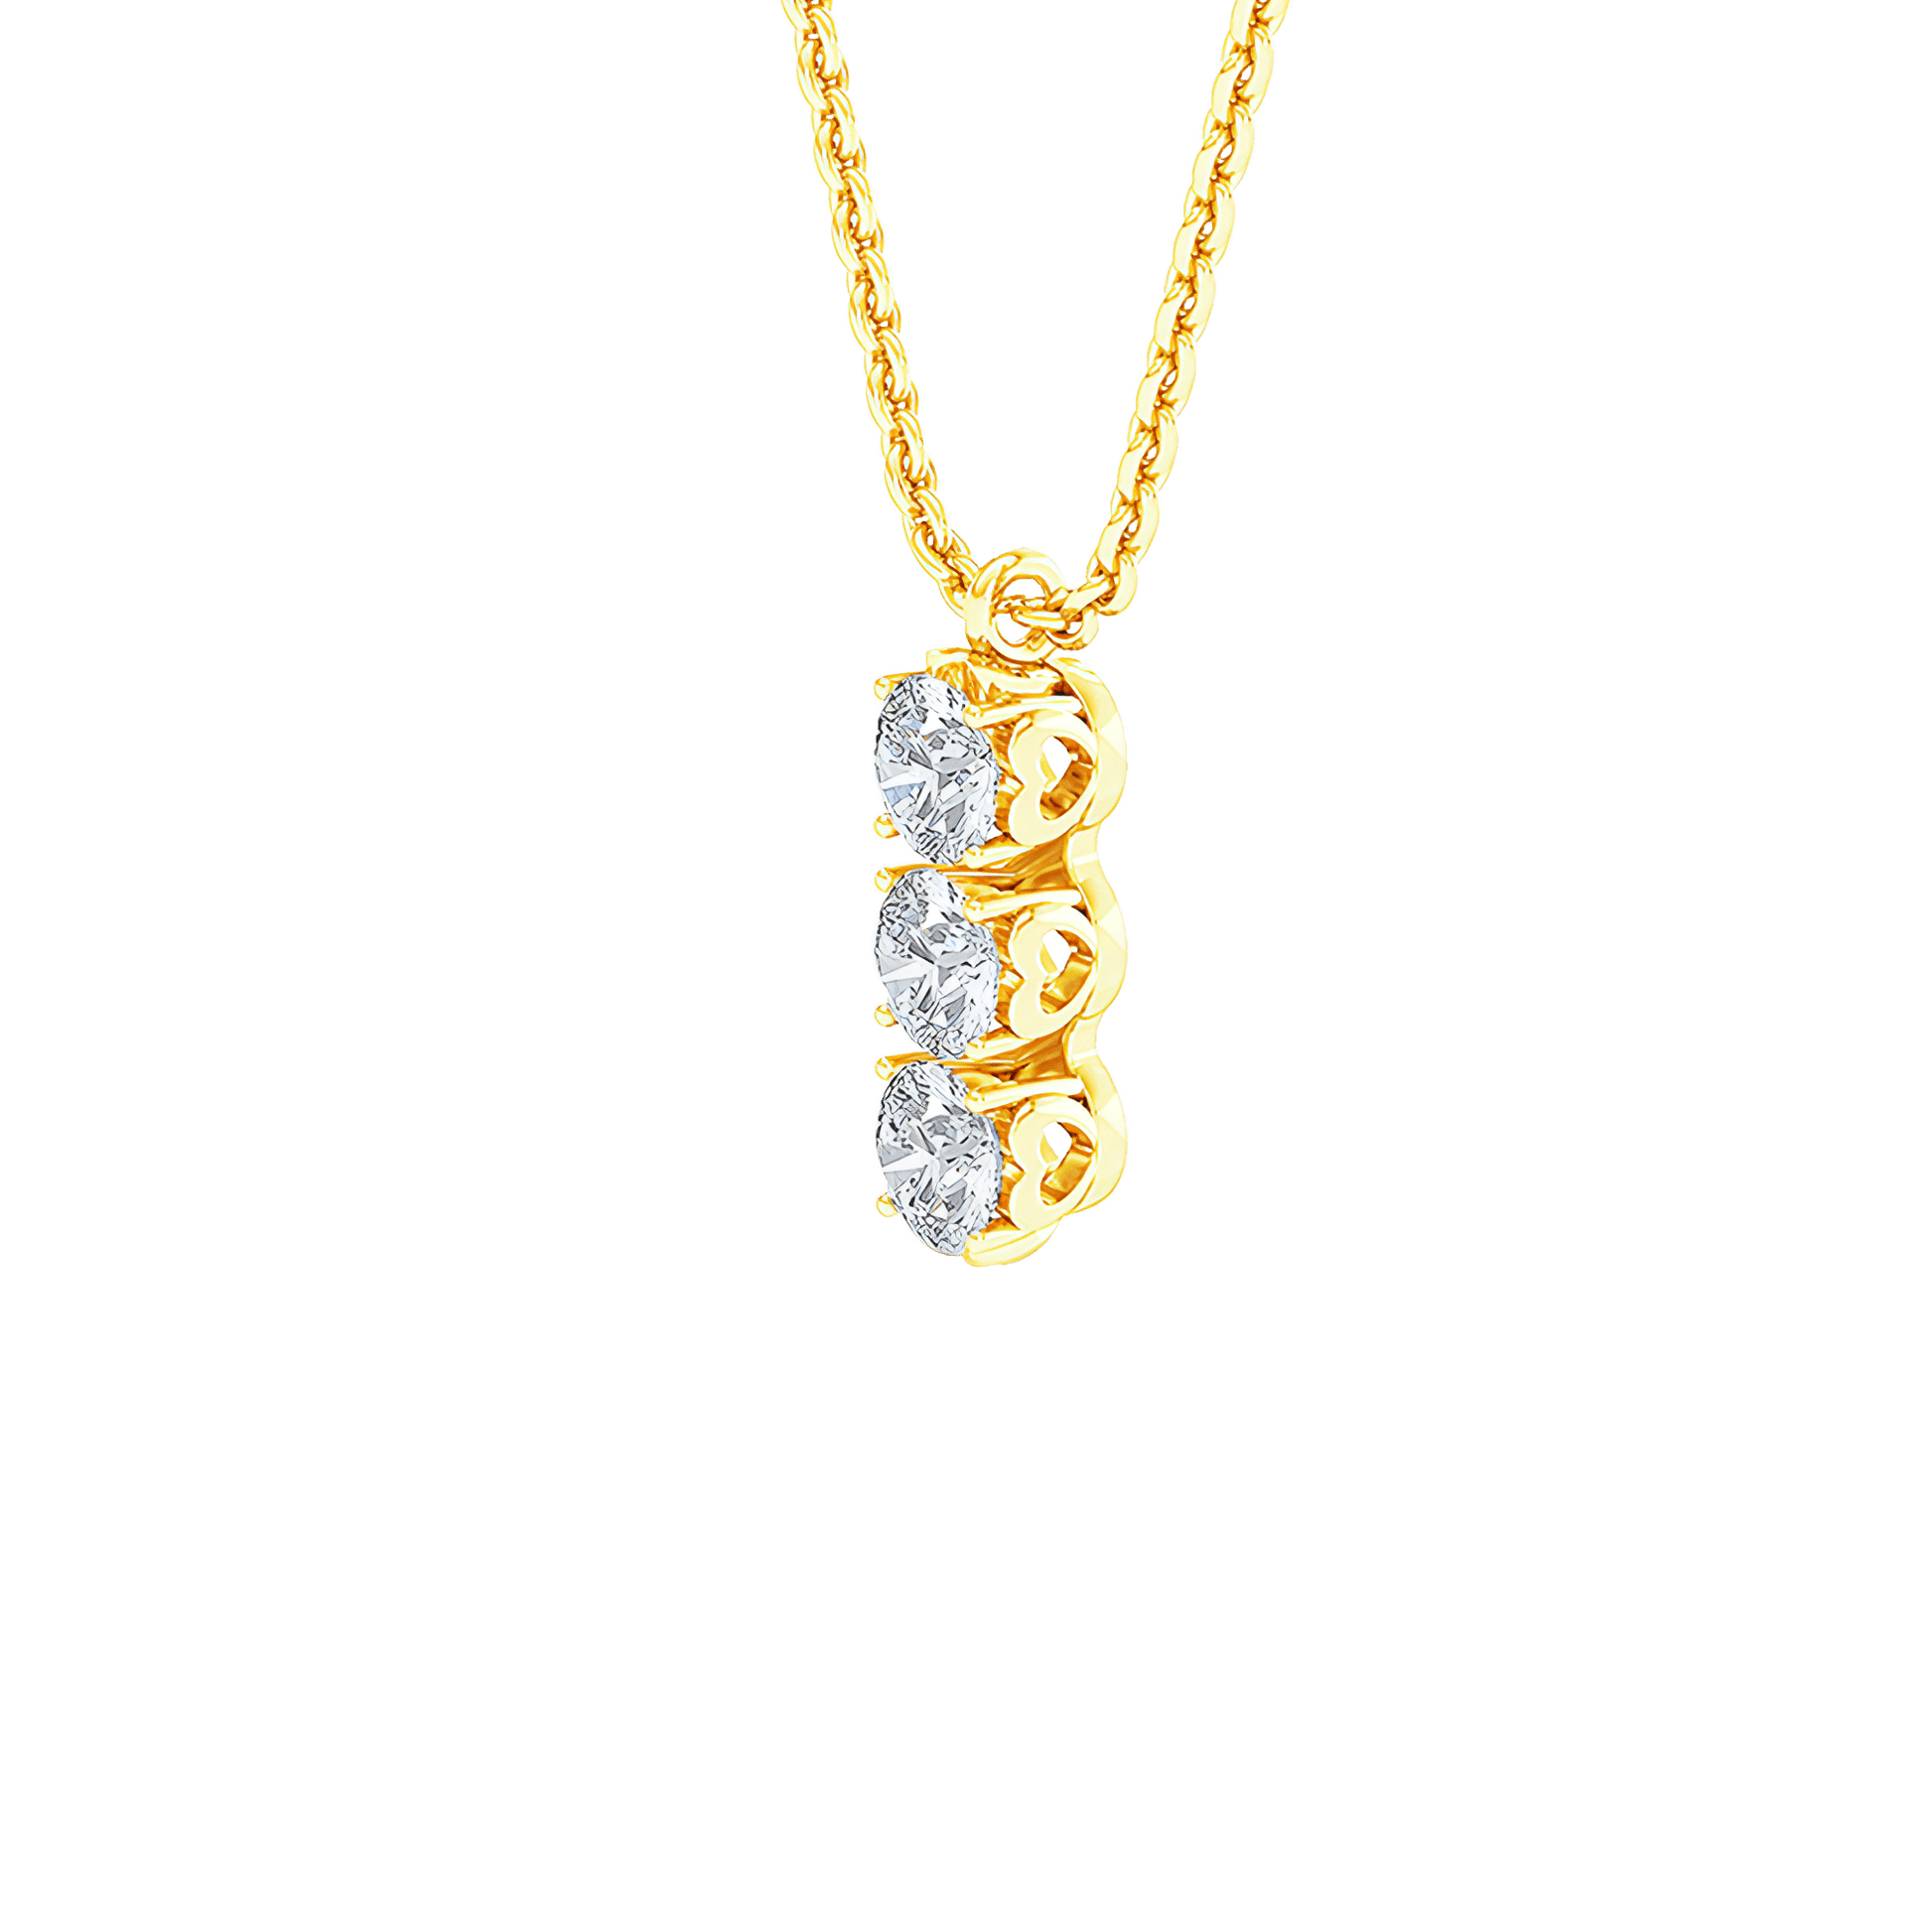  Trilogy necklace - Three Stone Lab-Grown Diamond Necklace -  The Future Rocks  -    2 